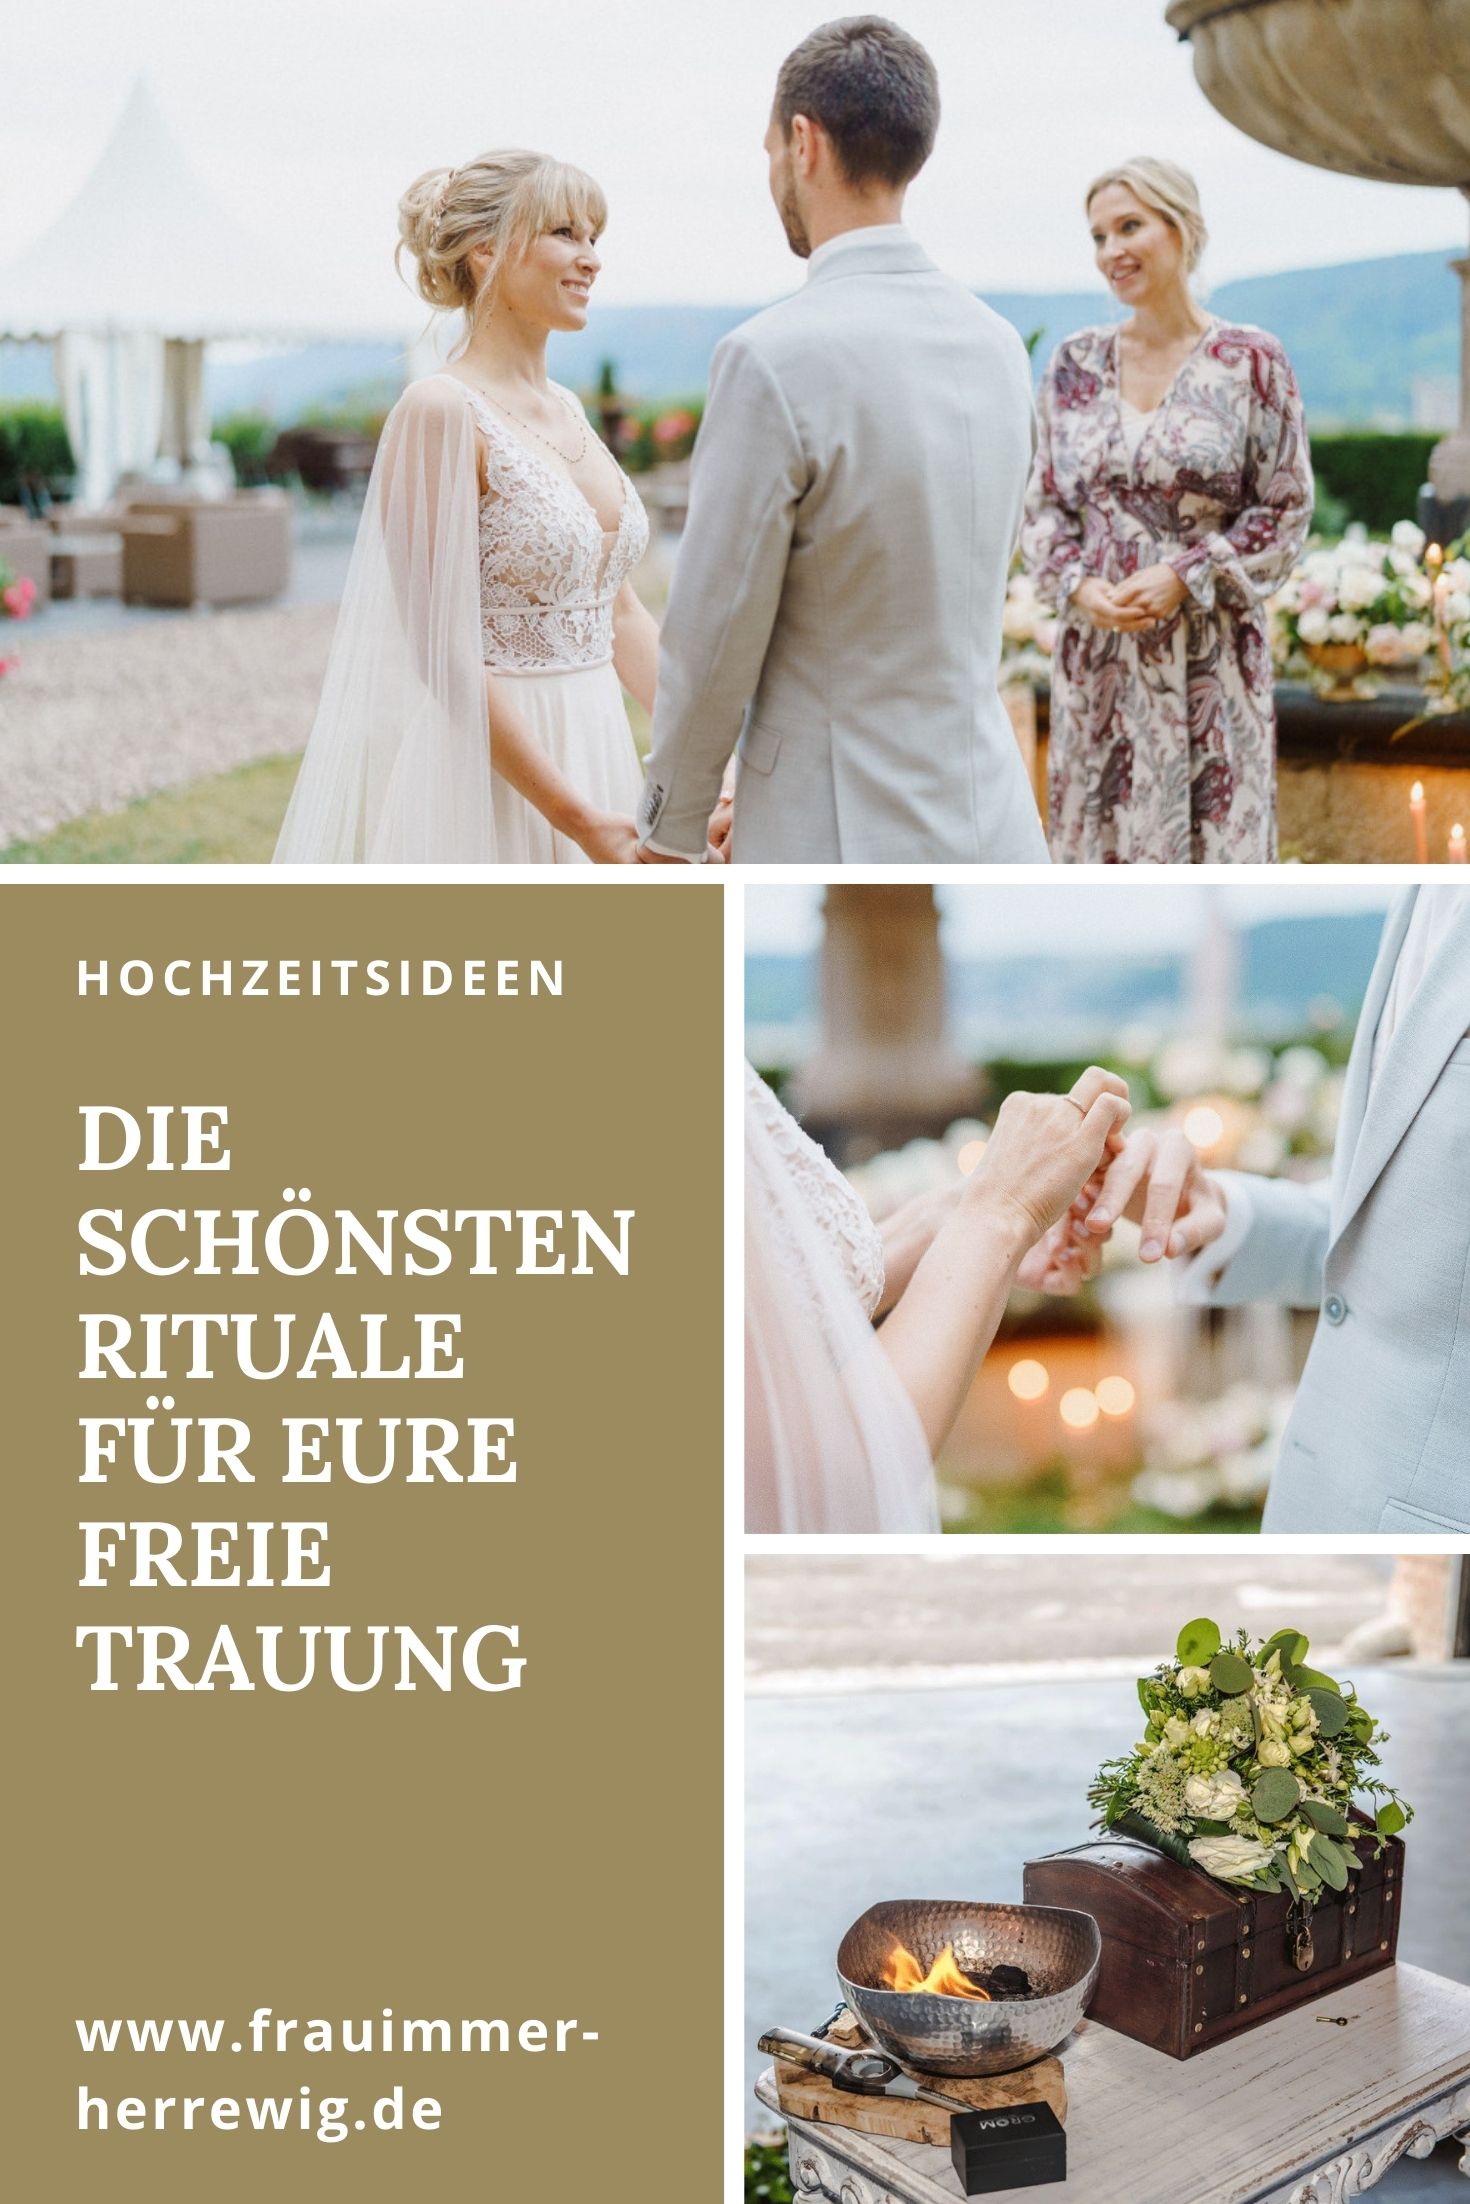 Freie trauung rituale 02 – gesehen bei frauimmer-herrewig.de